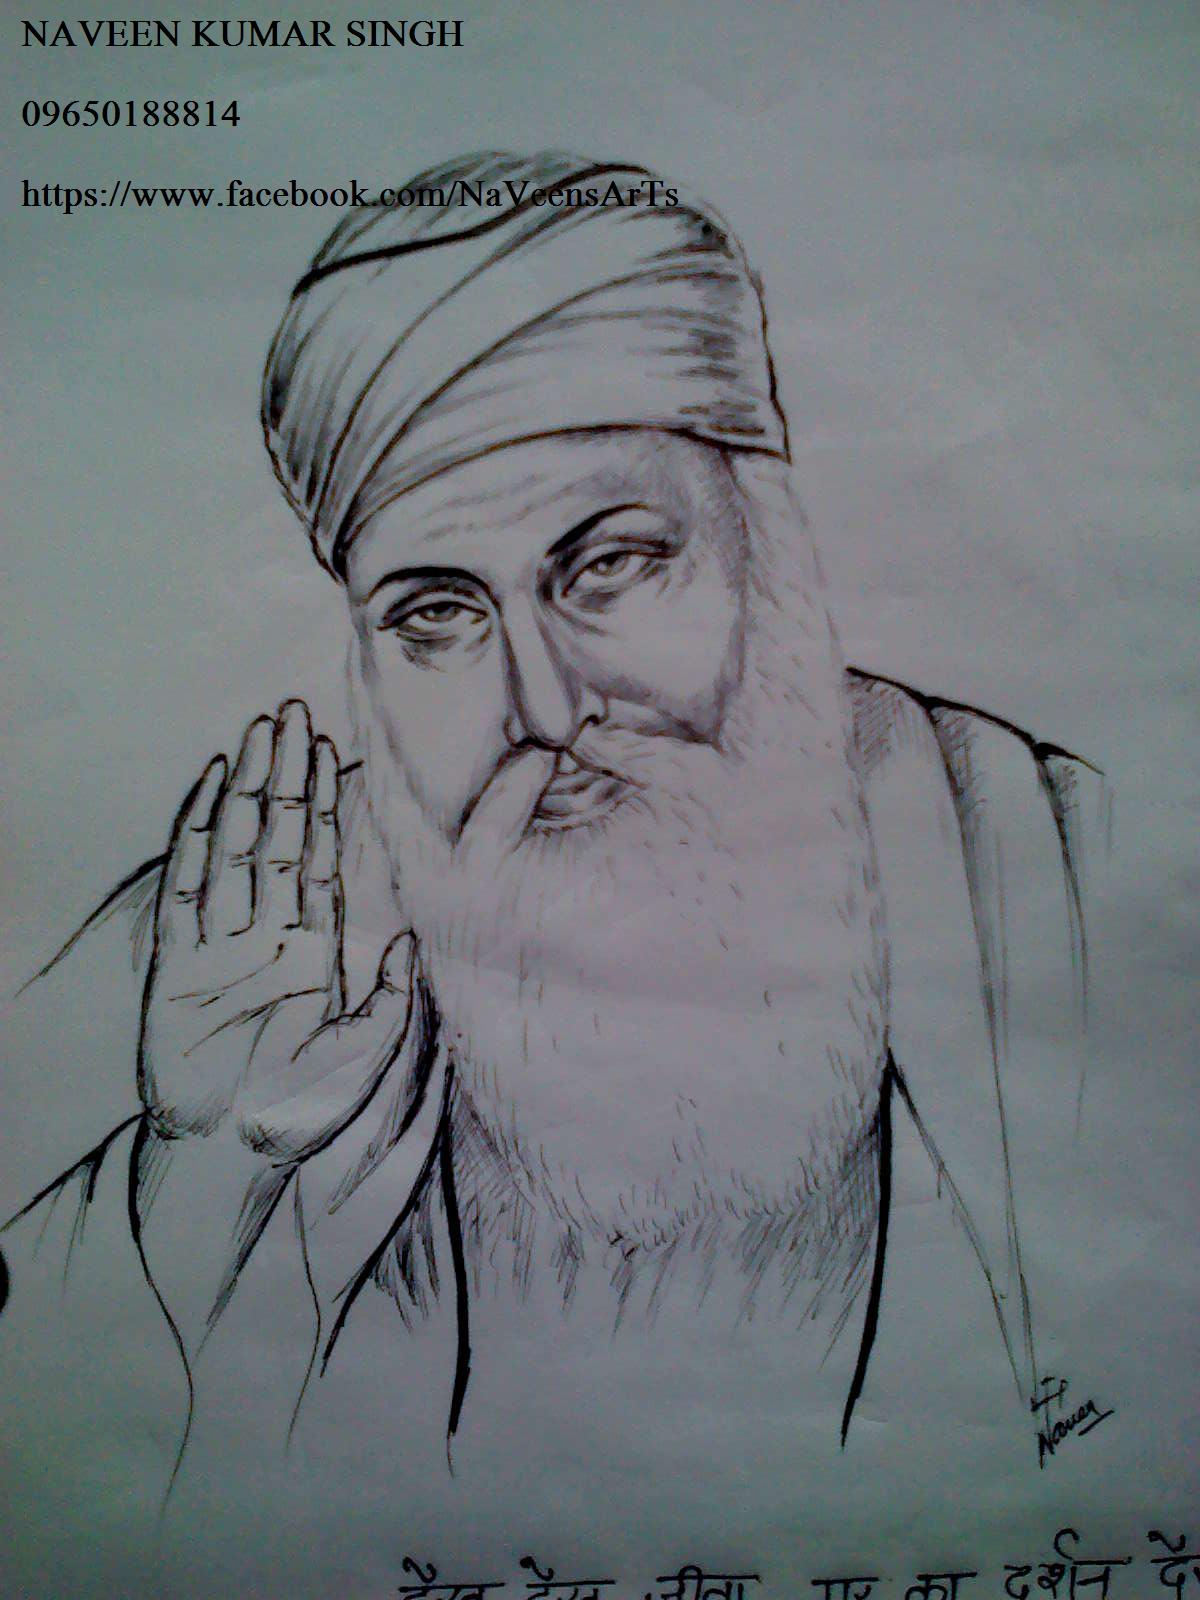 Sri Guru Nanak Dev ji Painting Images Wallpapers Pictures Photos